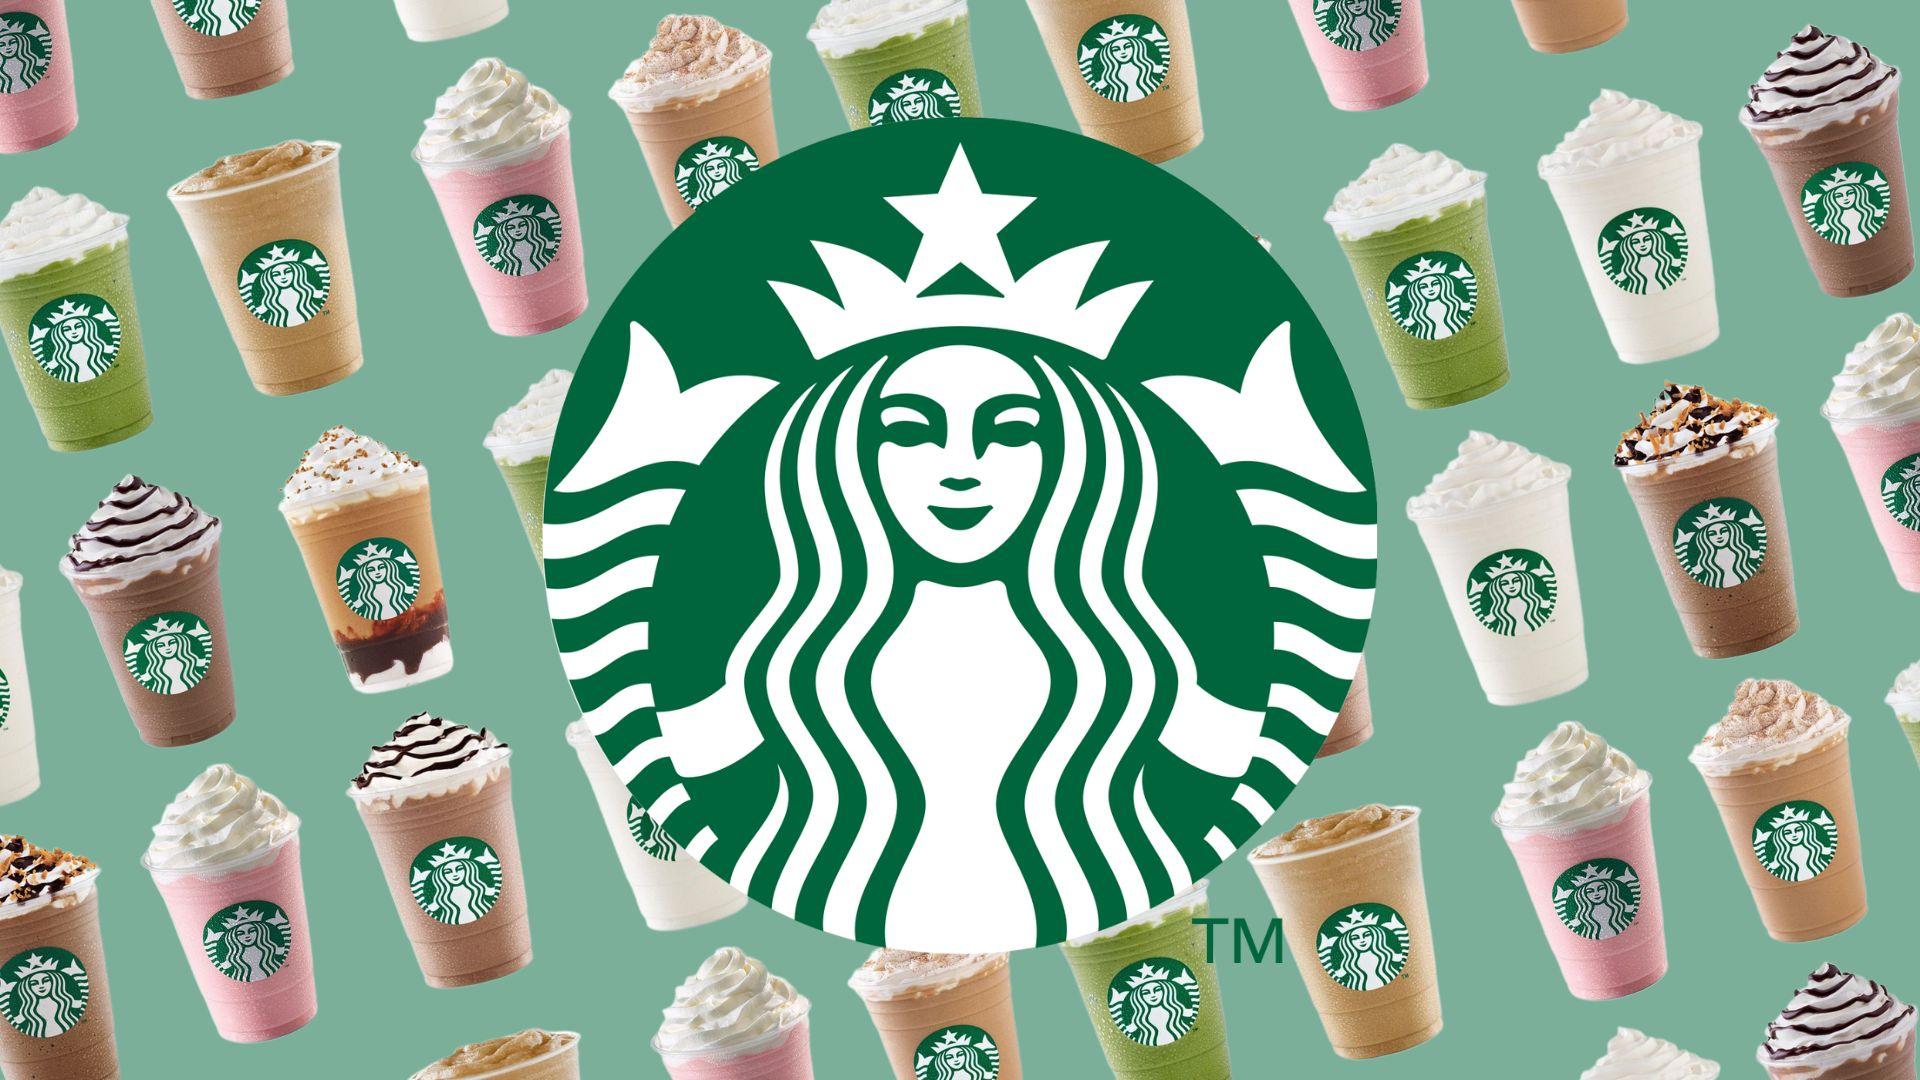 Starbucks logo and drinks